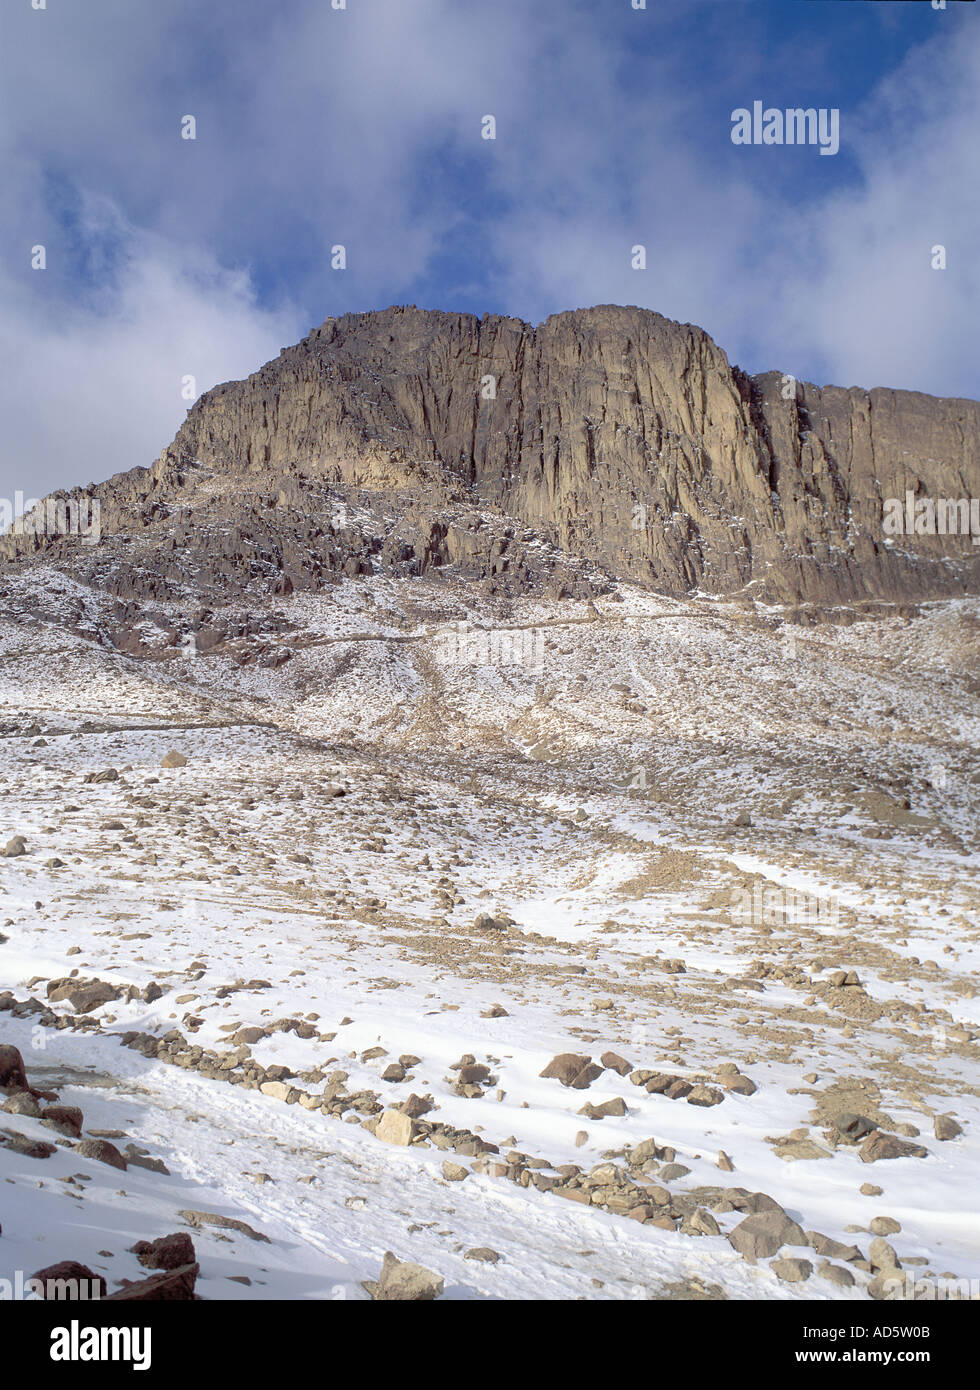 Schnee-Kamel-Weg auf den Gipfel des Mount Sinai, Ägypten Stockfoto